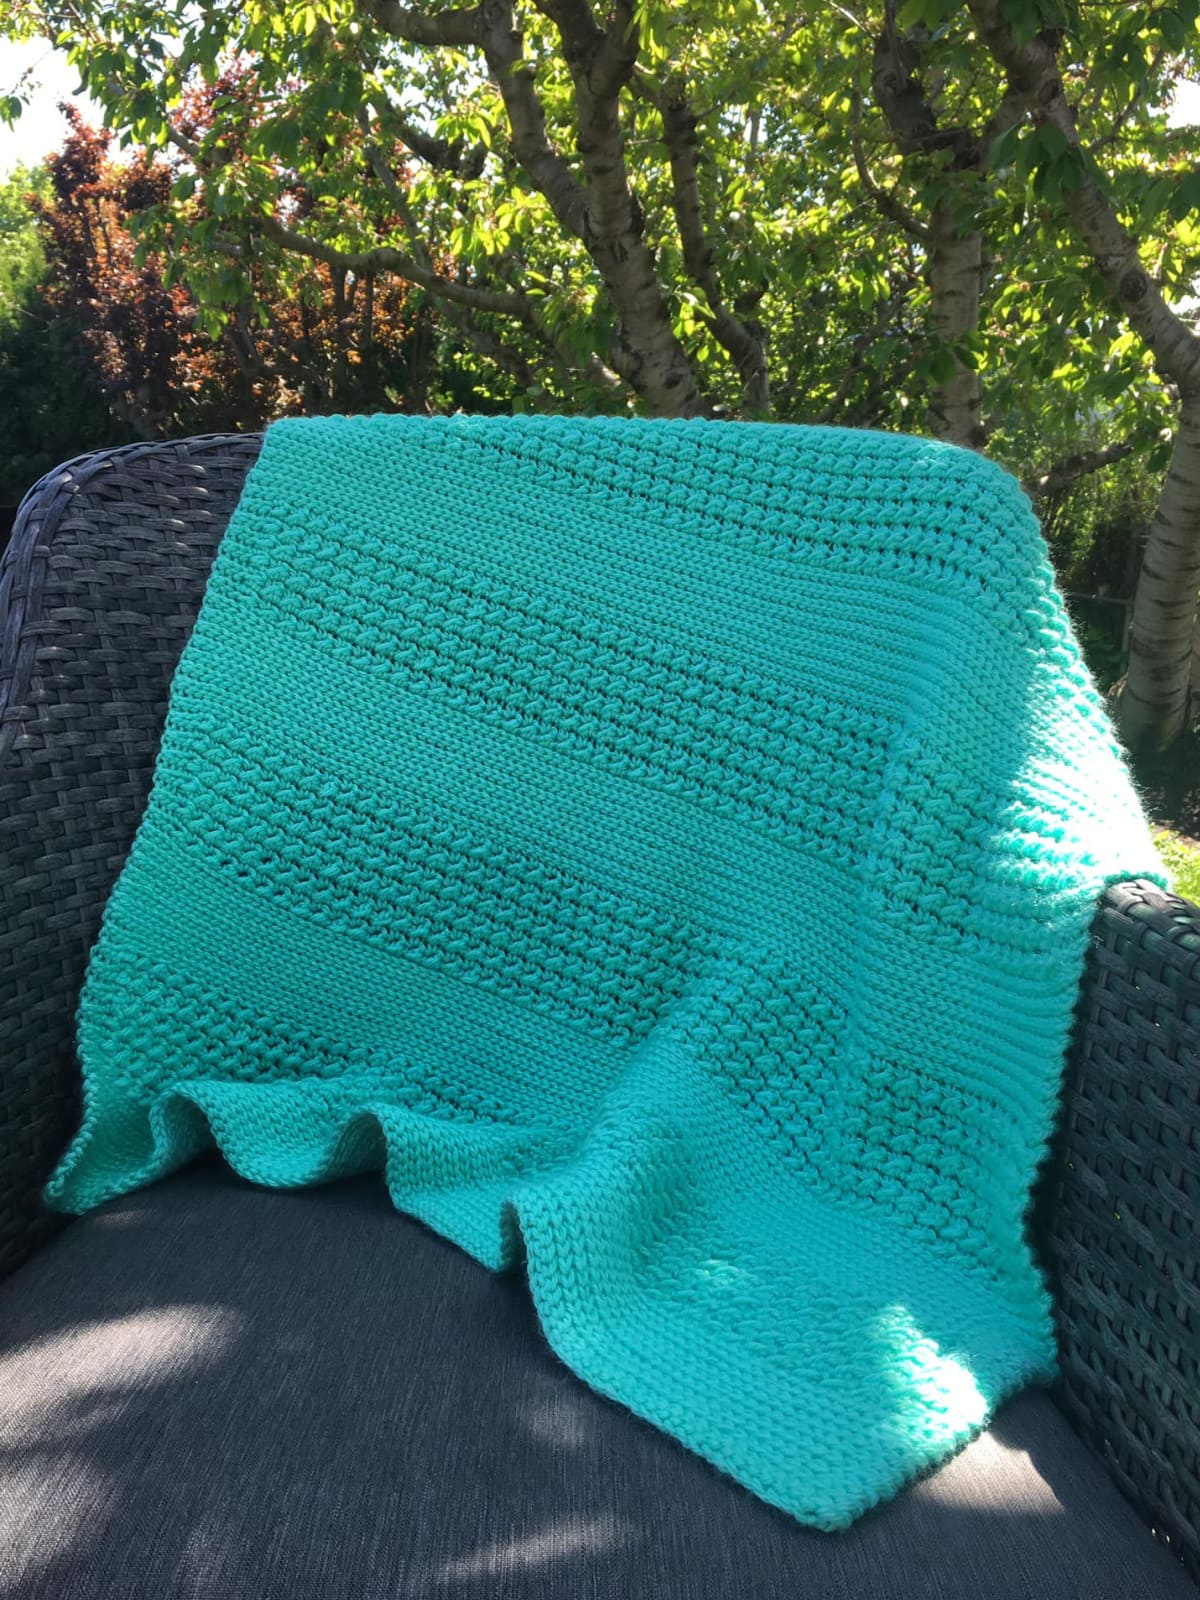 Crochet Baby Blankets Patterns using Vanna's Choice Yarn - Easy